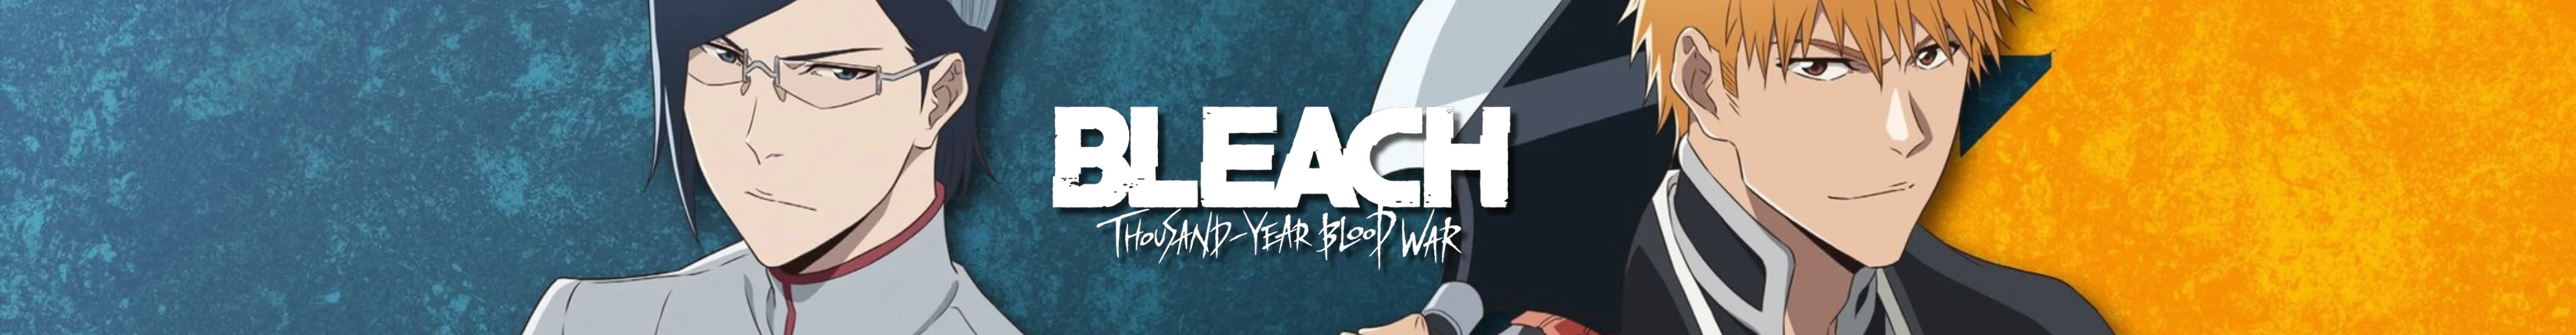 Bleach hoodies banner